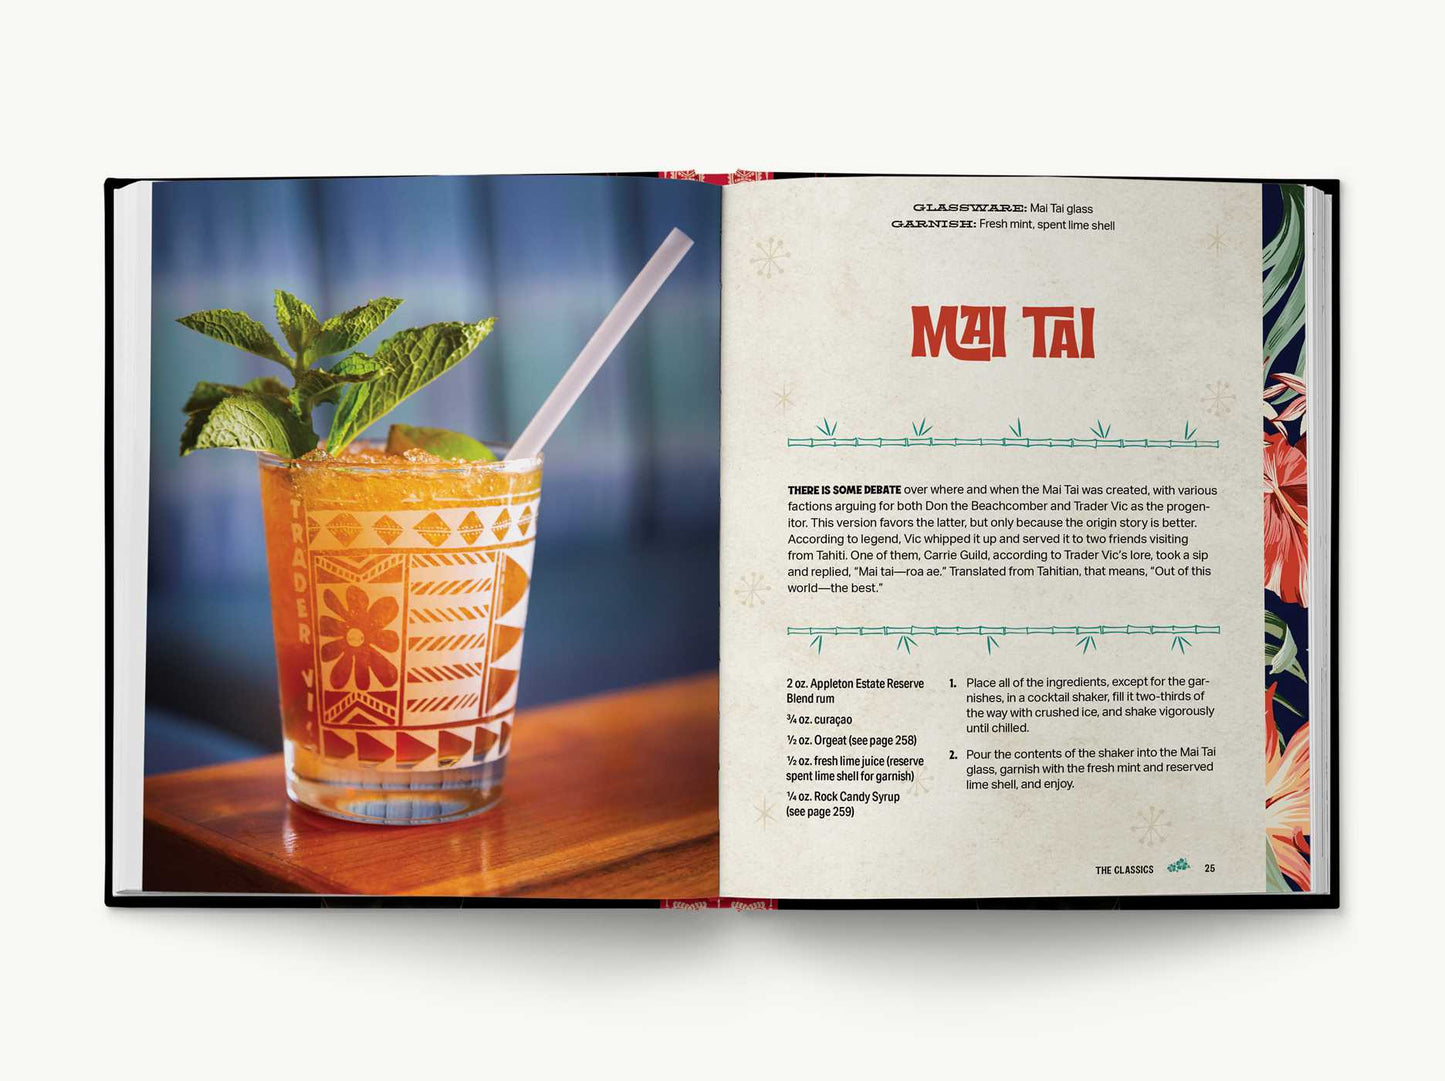 Tiki Cocktails: Over 50 Modern Tropical Cocktails